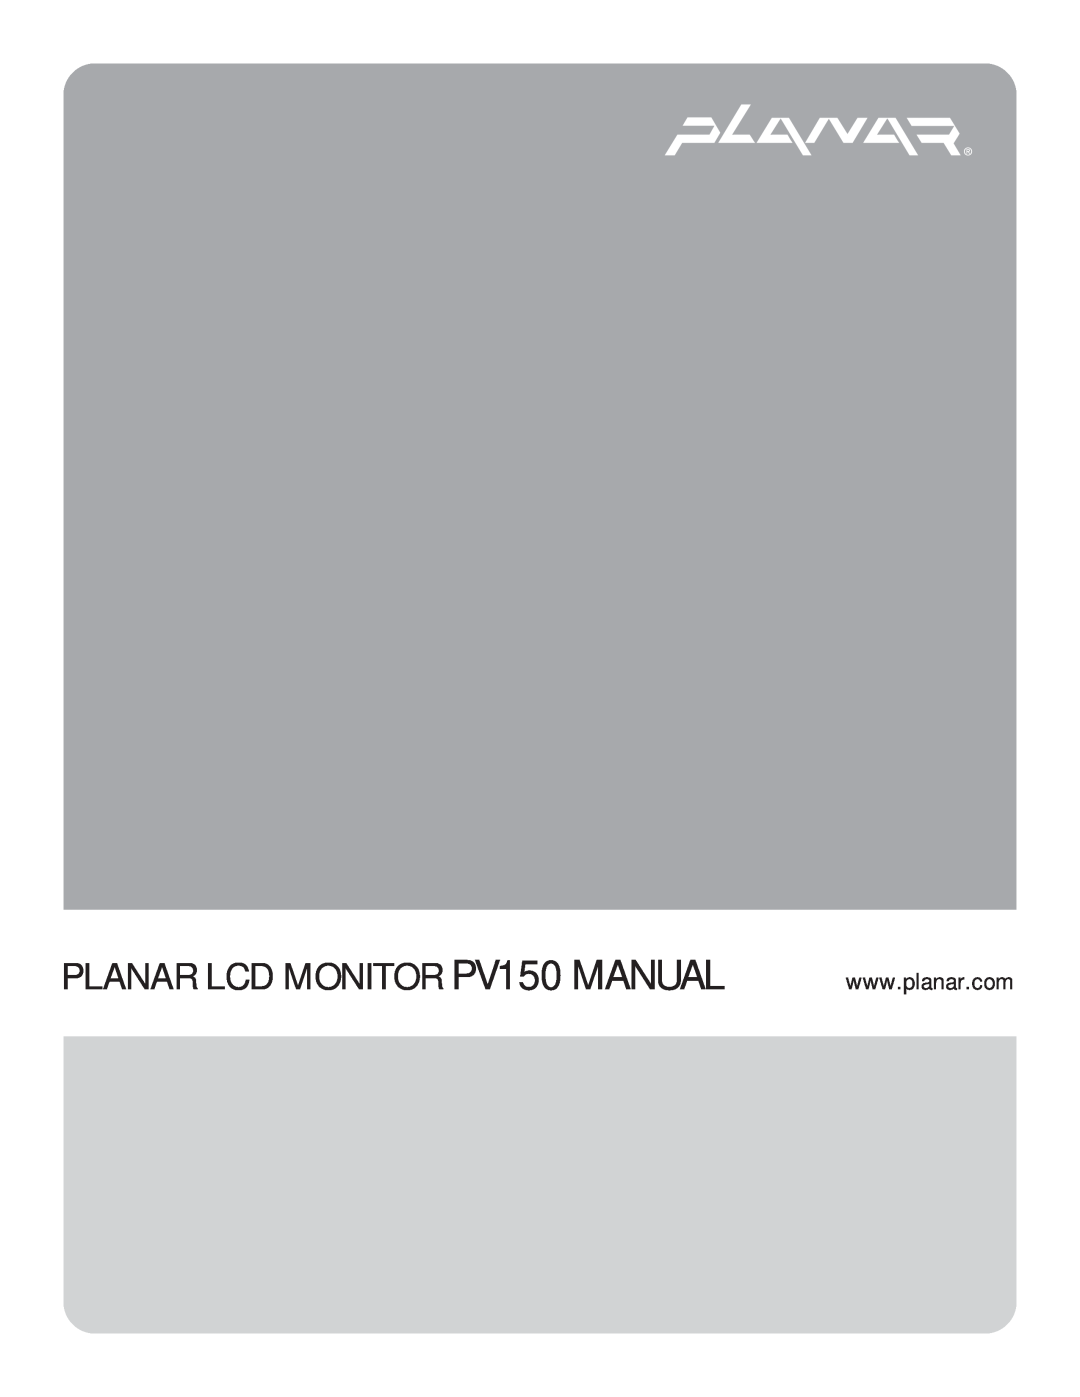 Planar manual PLANAR LCD MONITOR PV150 MANUAL 